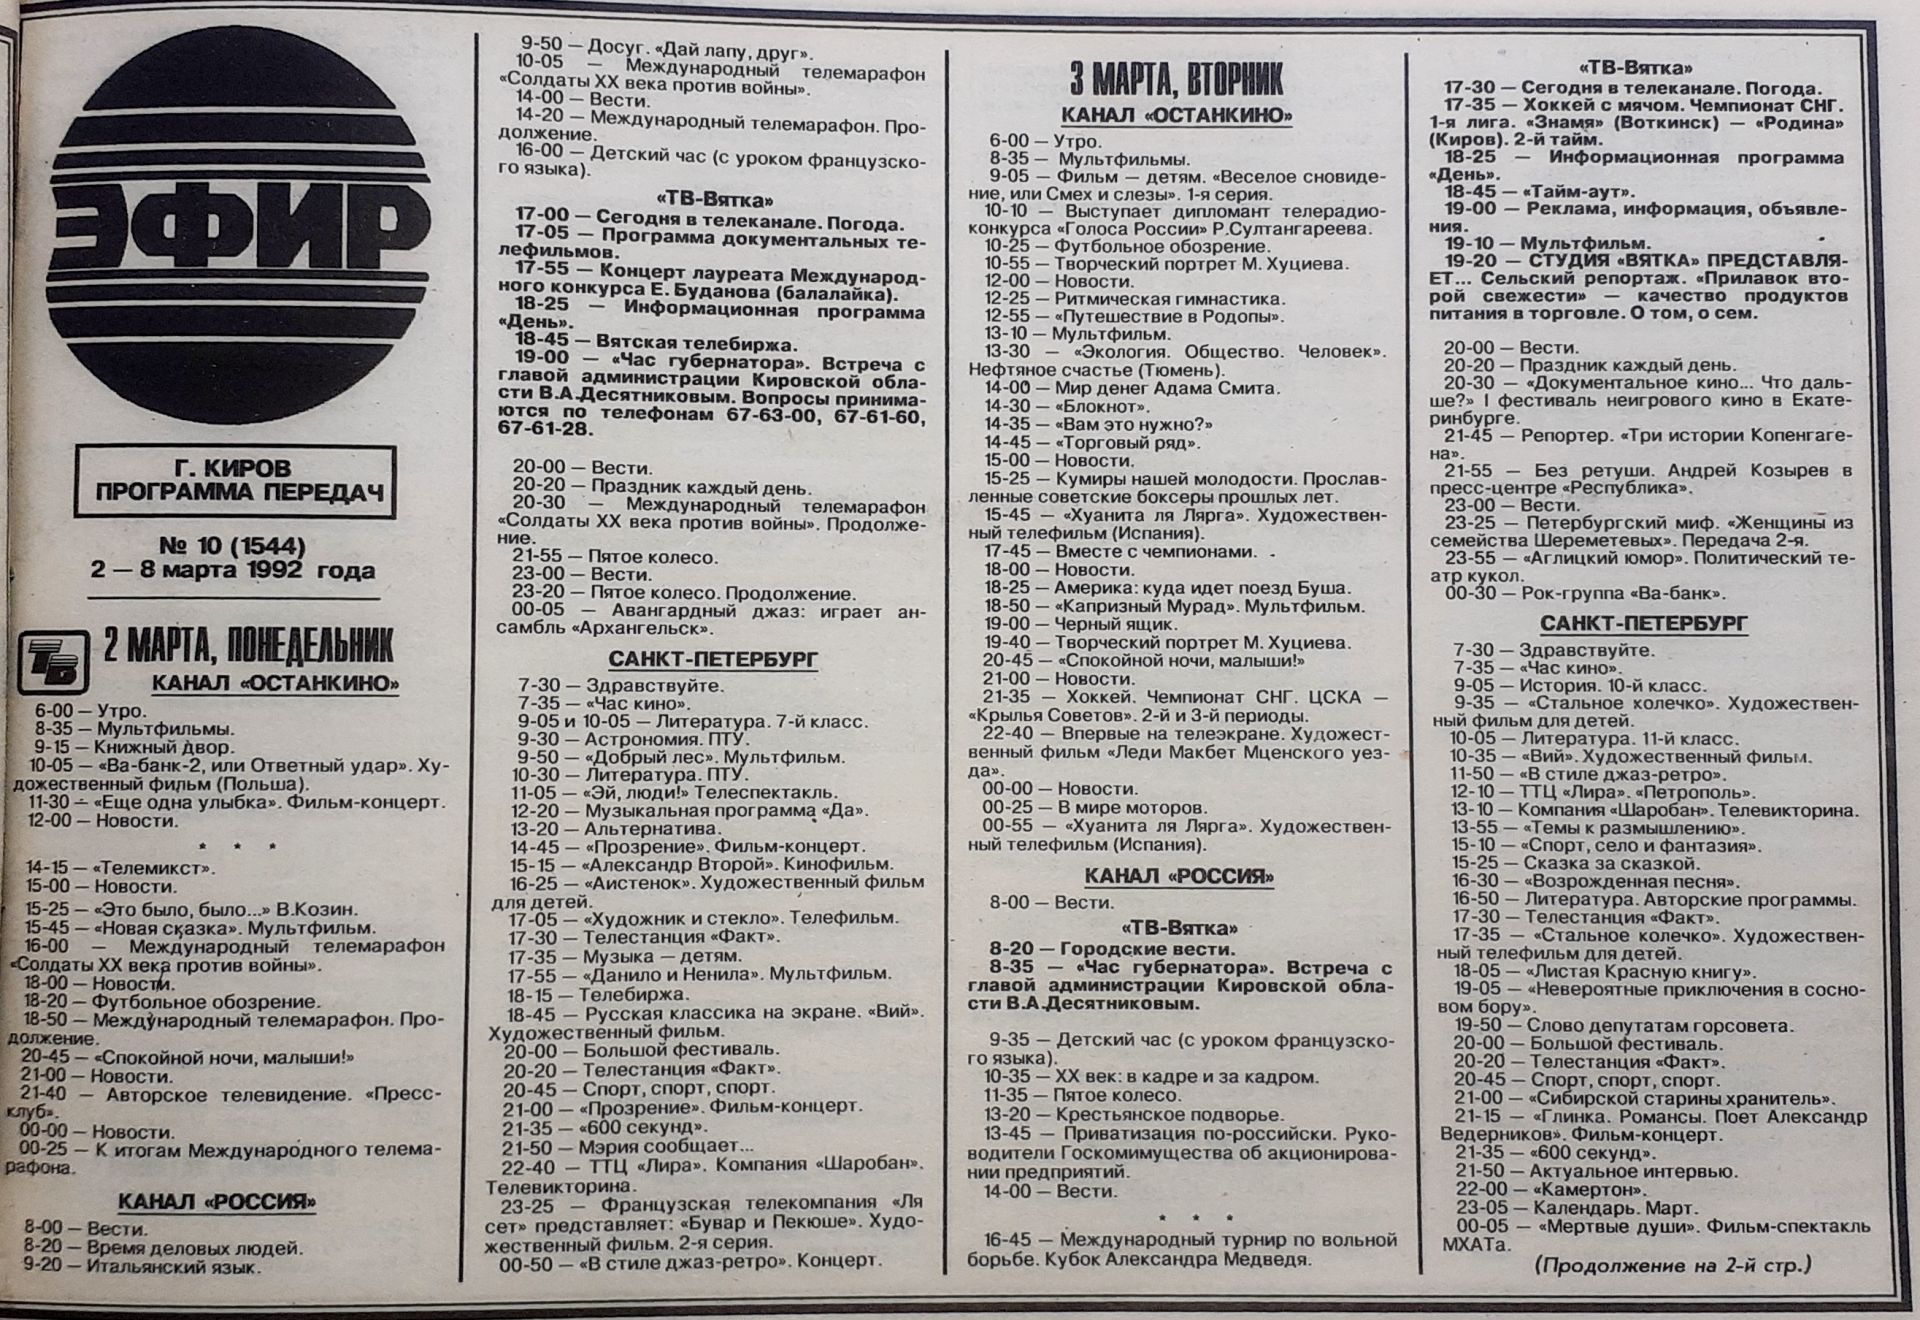 Программа передач на сегодня про любовь уфа. Программа телепередач. Программа телепередач 1992 года. Программа на 1992 год. Название телепередач.